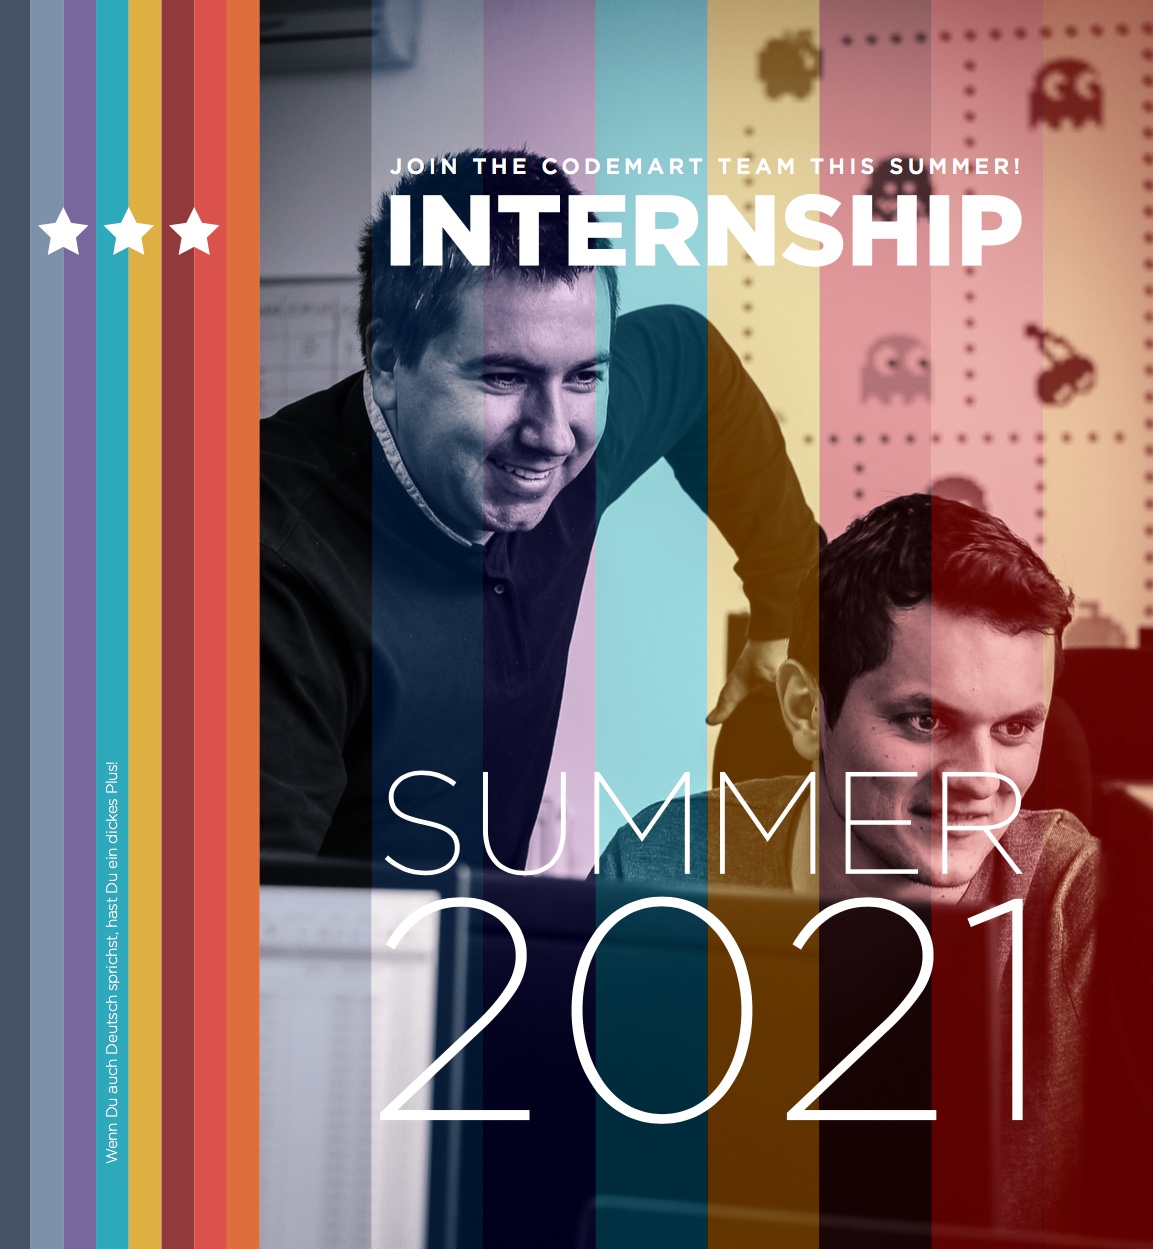 cm_flyer_internship_2021b.jpg